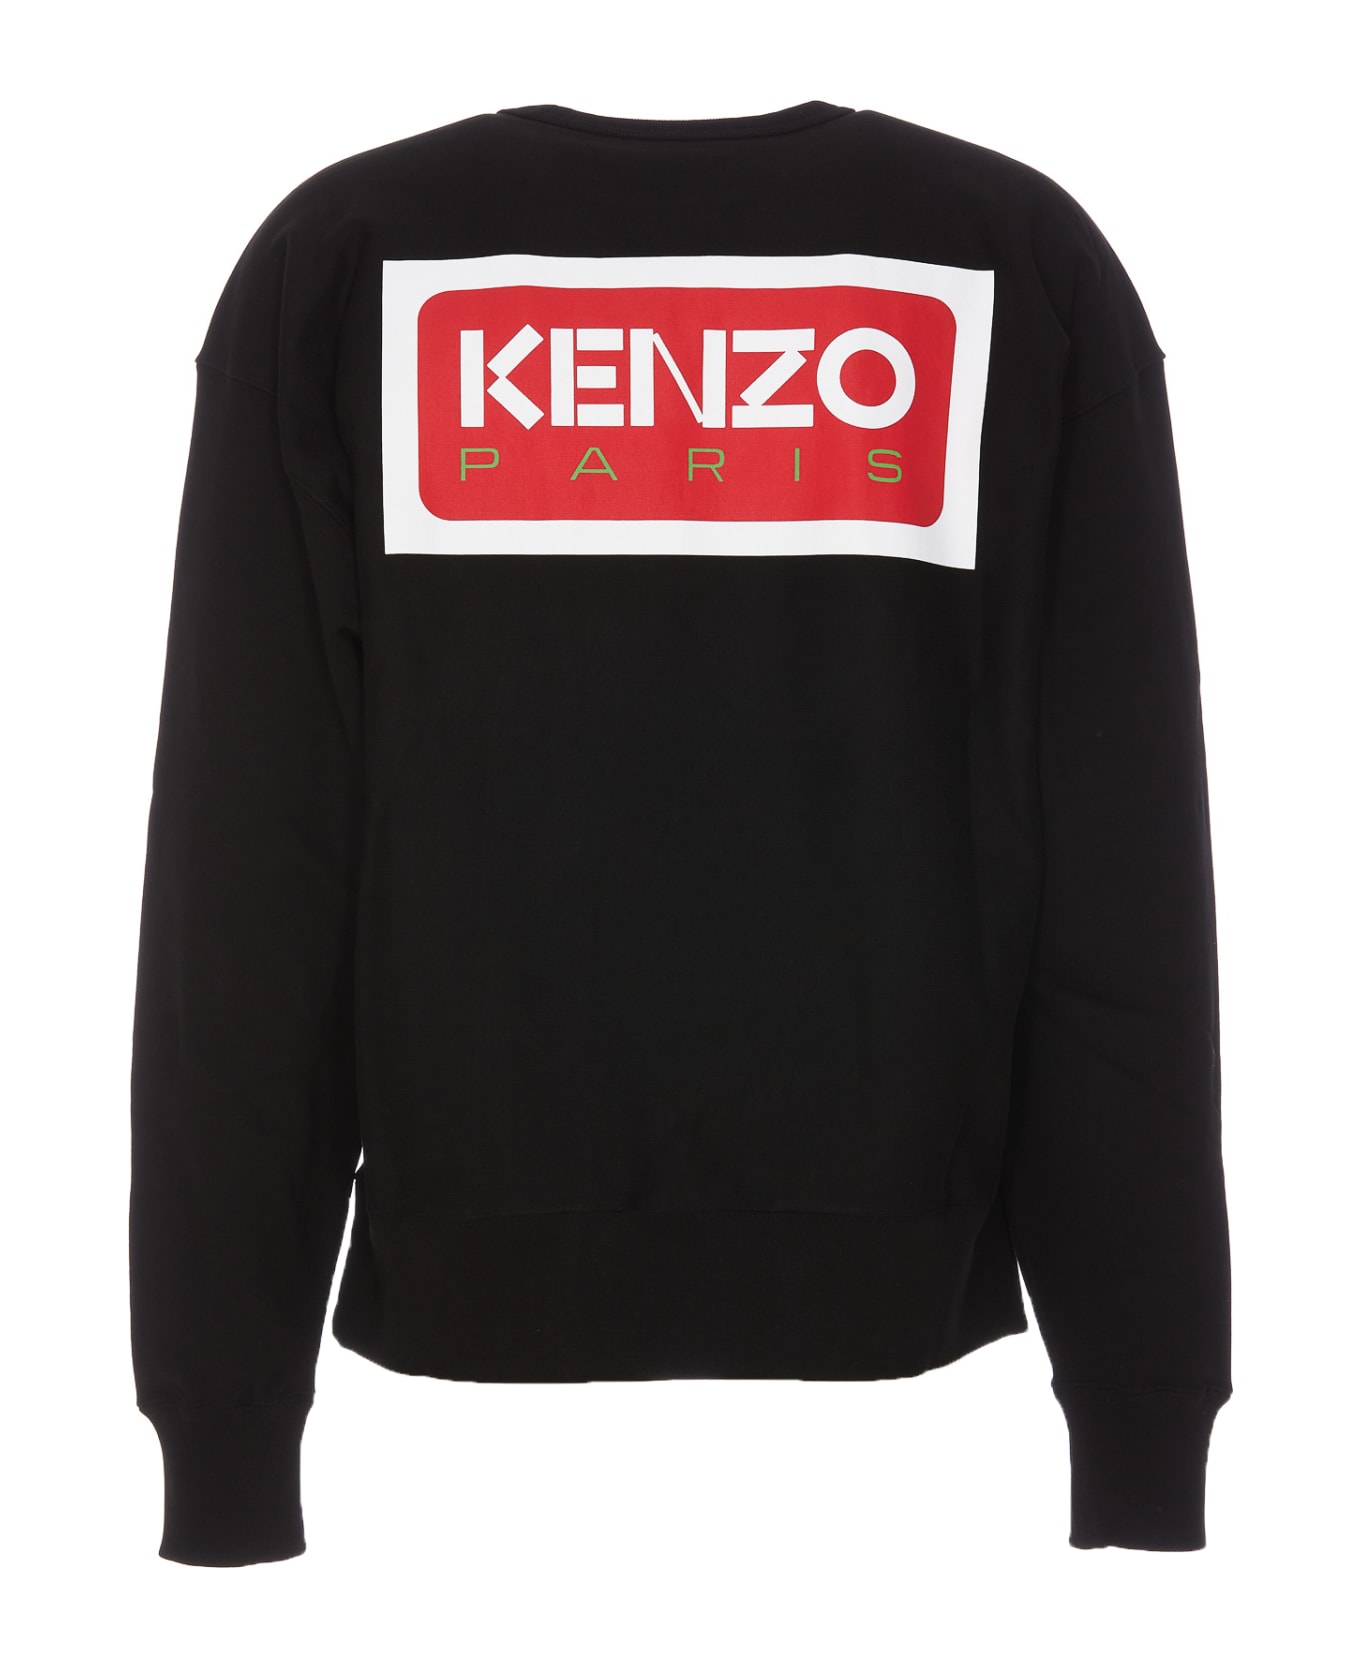 Kenzo Paris Sweatshirt - BLACK